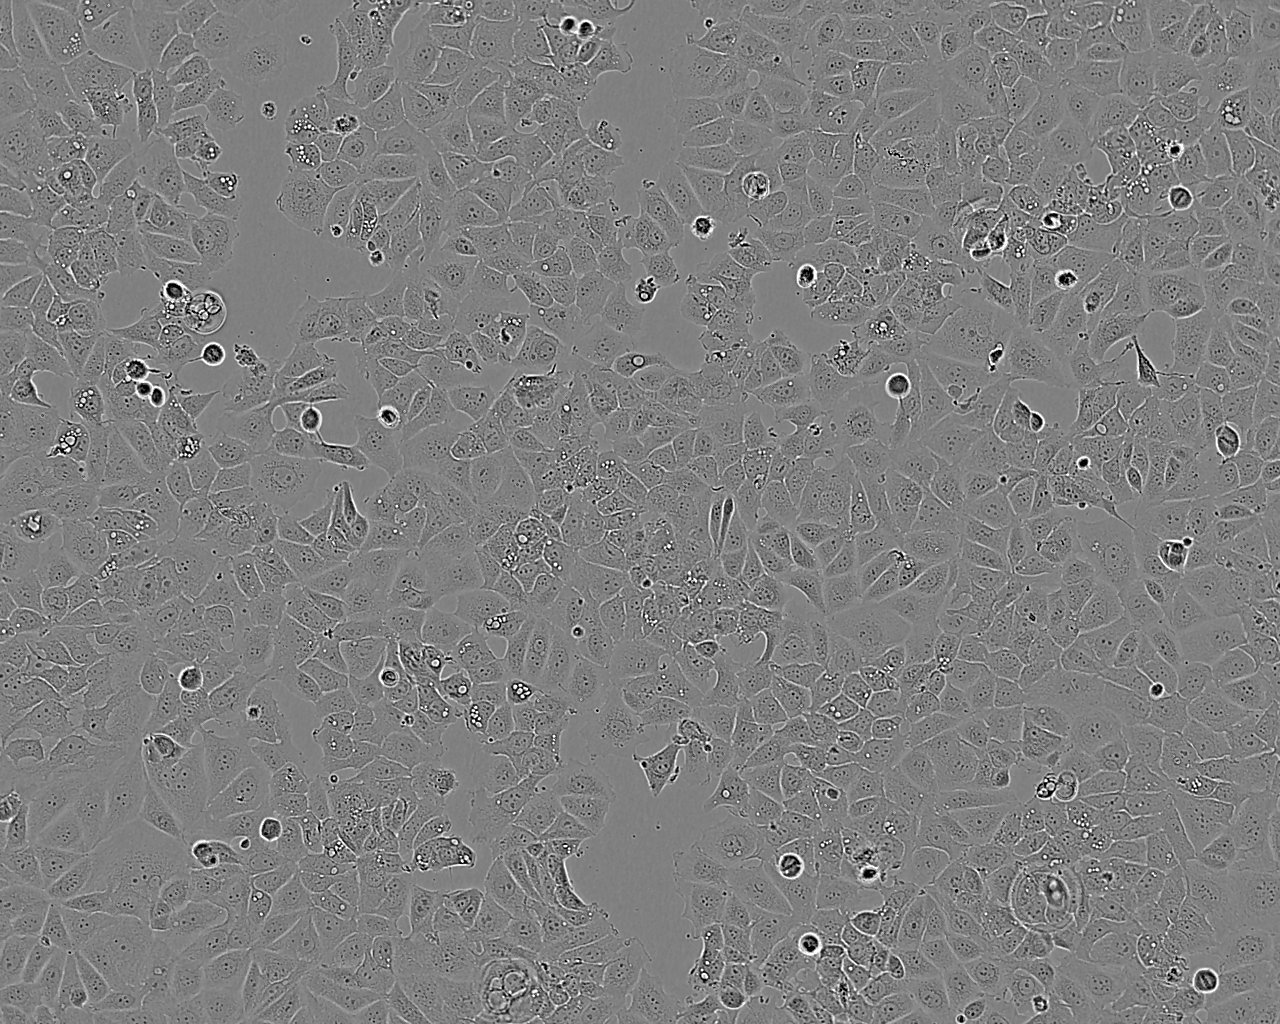 DMS 273 Cells|人小细胞肺癌细胞系,DMS 273 Cells